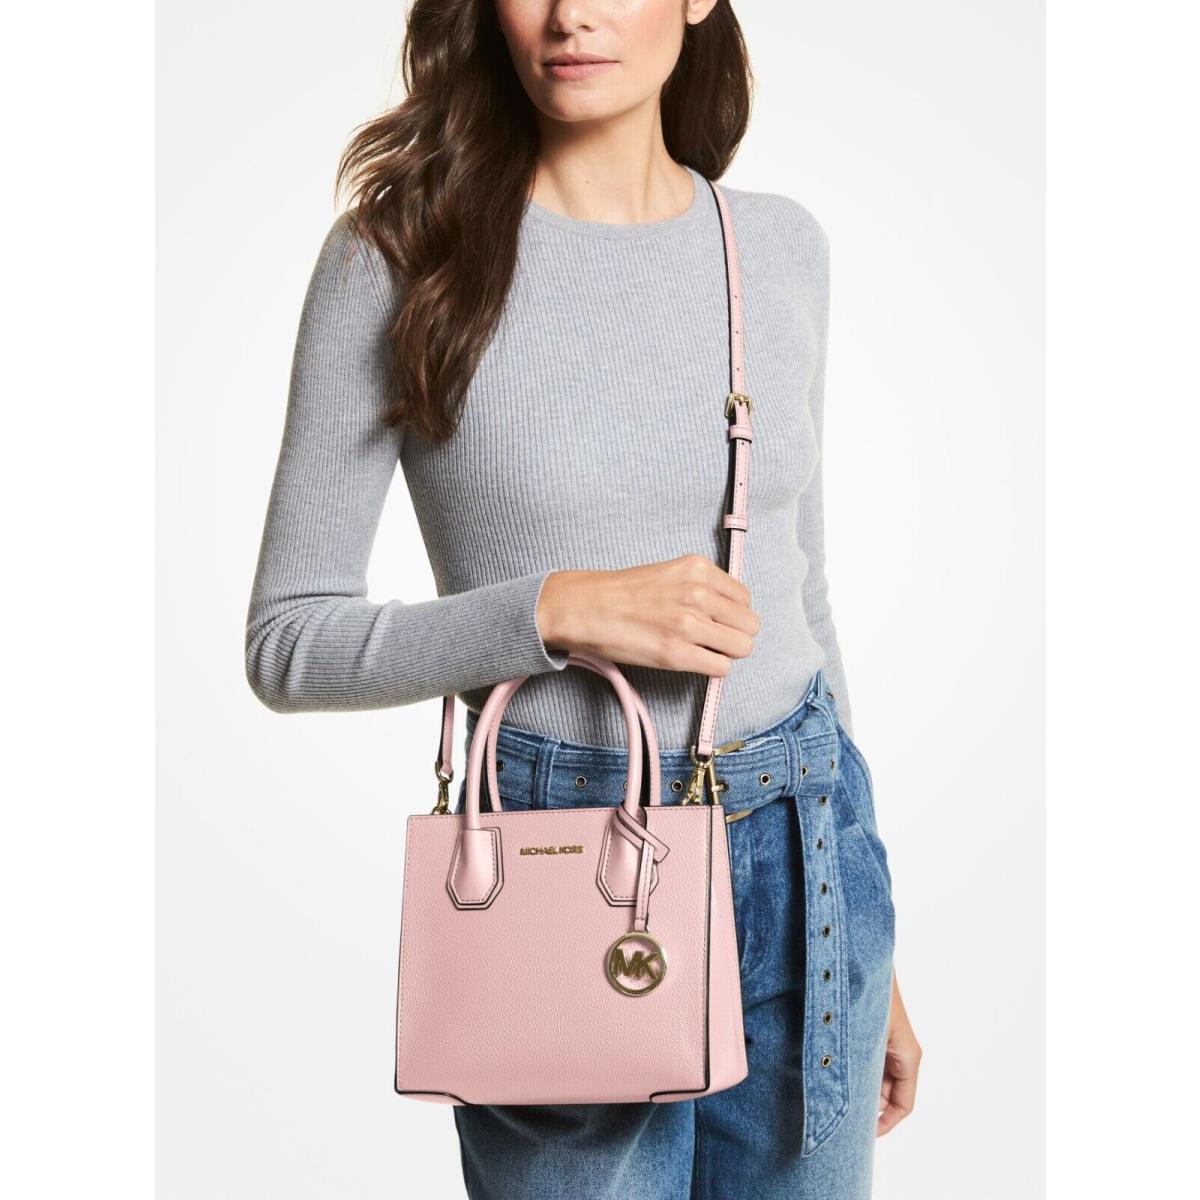 MICHAEL KORS Pale Pink Purse | Pink purse, Purses, Michael kors bag